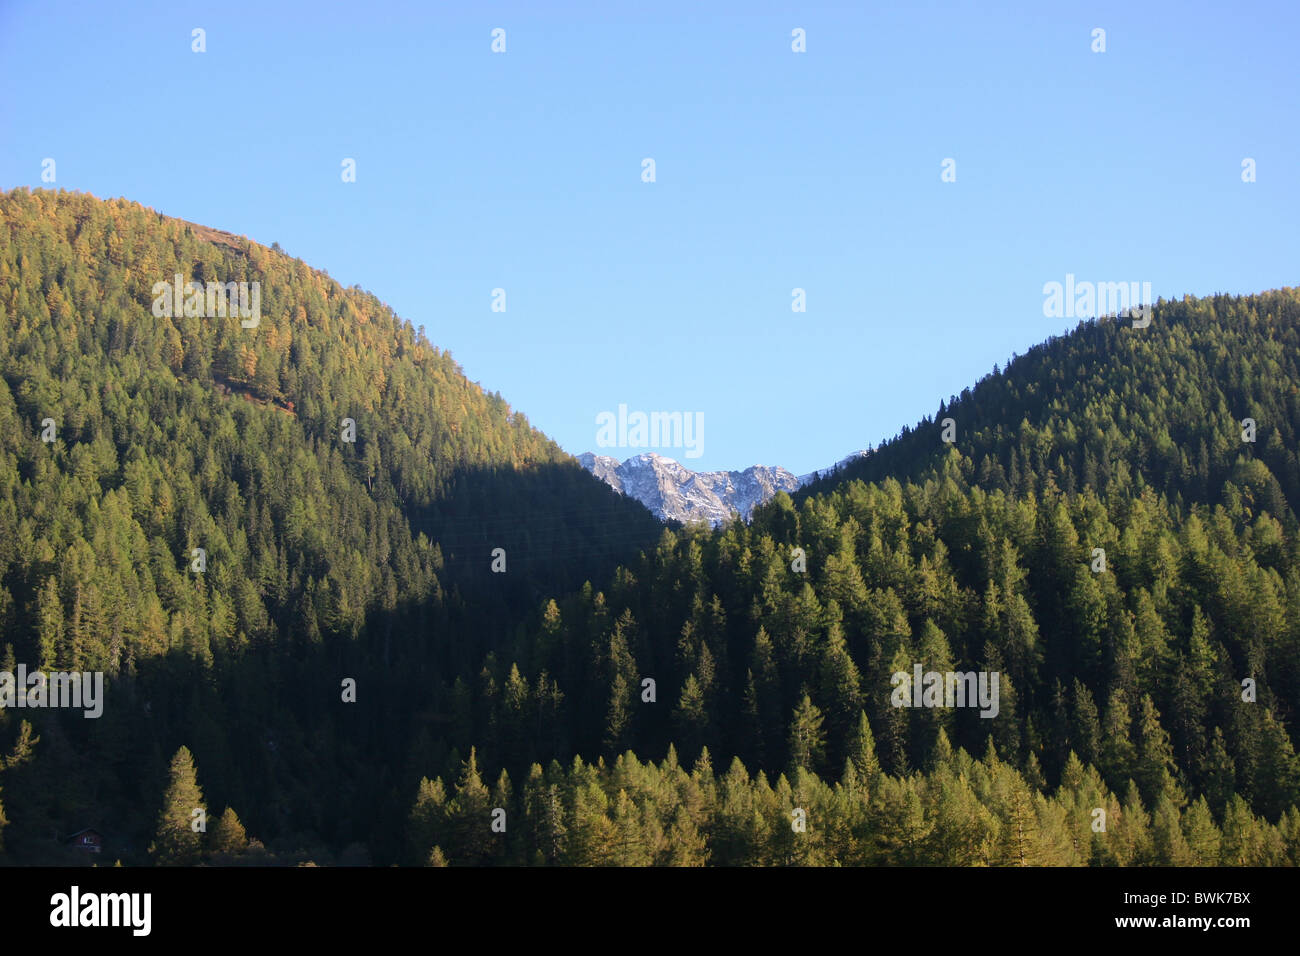 Switzerland Europe Valais Oberwallis Goms autumn wood forest scenery landscape coniferous forest mountains Stock Photo